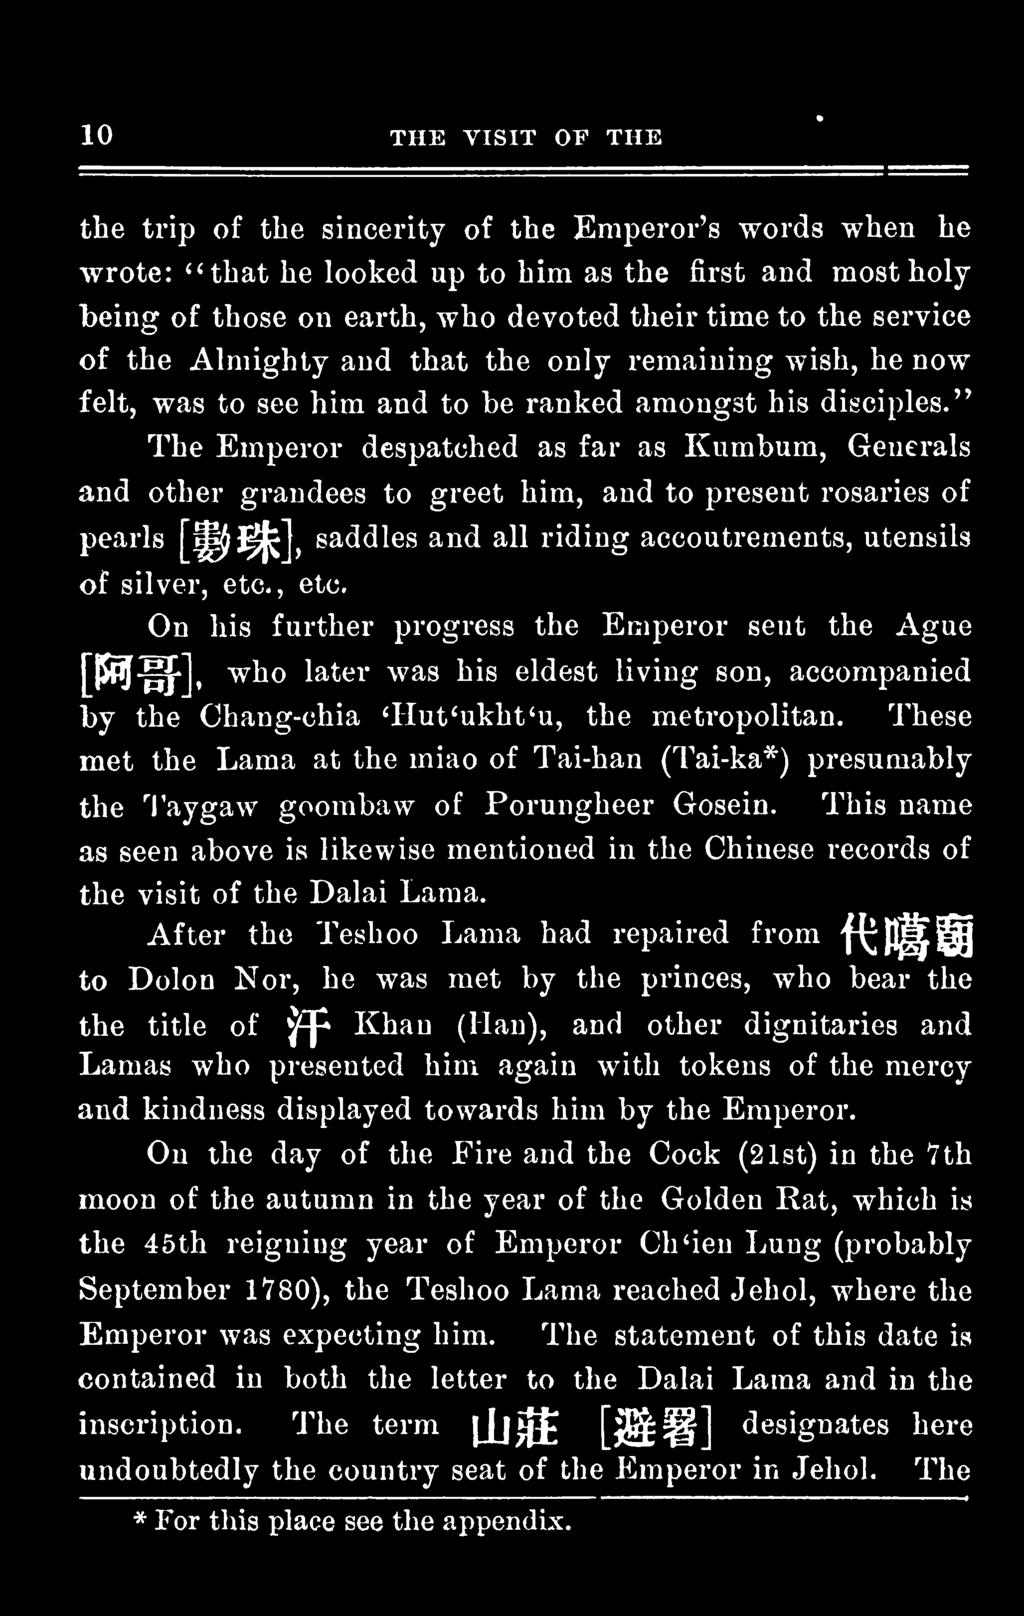 These met the Lama at the miao of Tai-han (Tai-ka*) presumably the Taygaw goombaw of Porungheer Gosein.